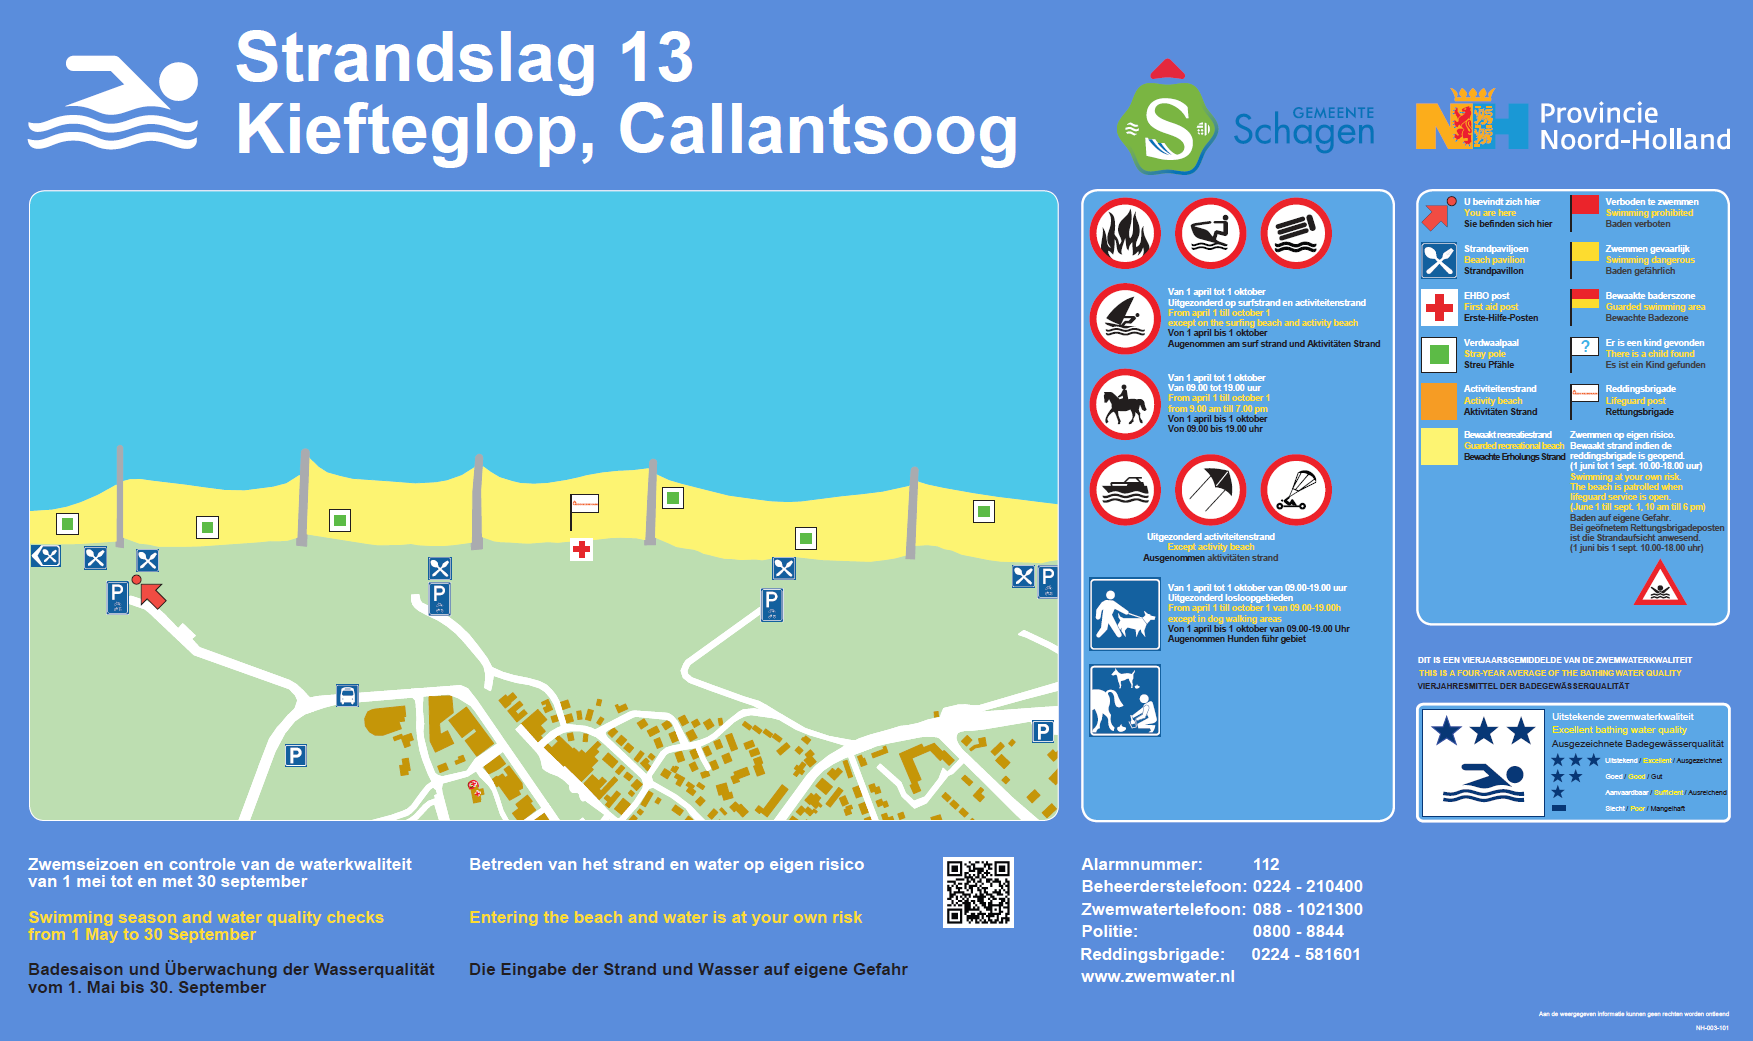 The information board at the swimming location Callantsoog, Strandslag 13 Kiefteglop